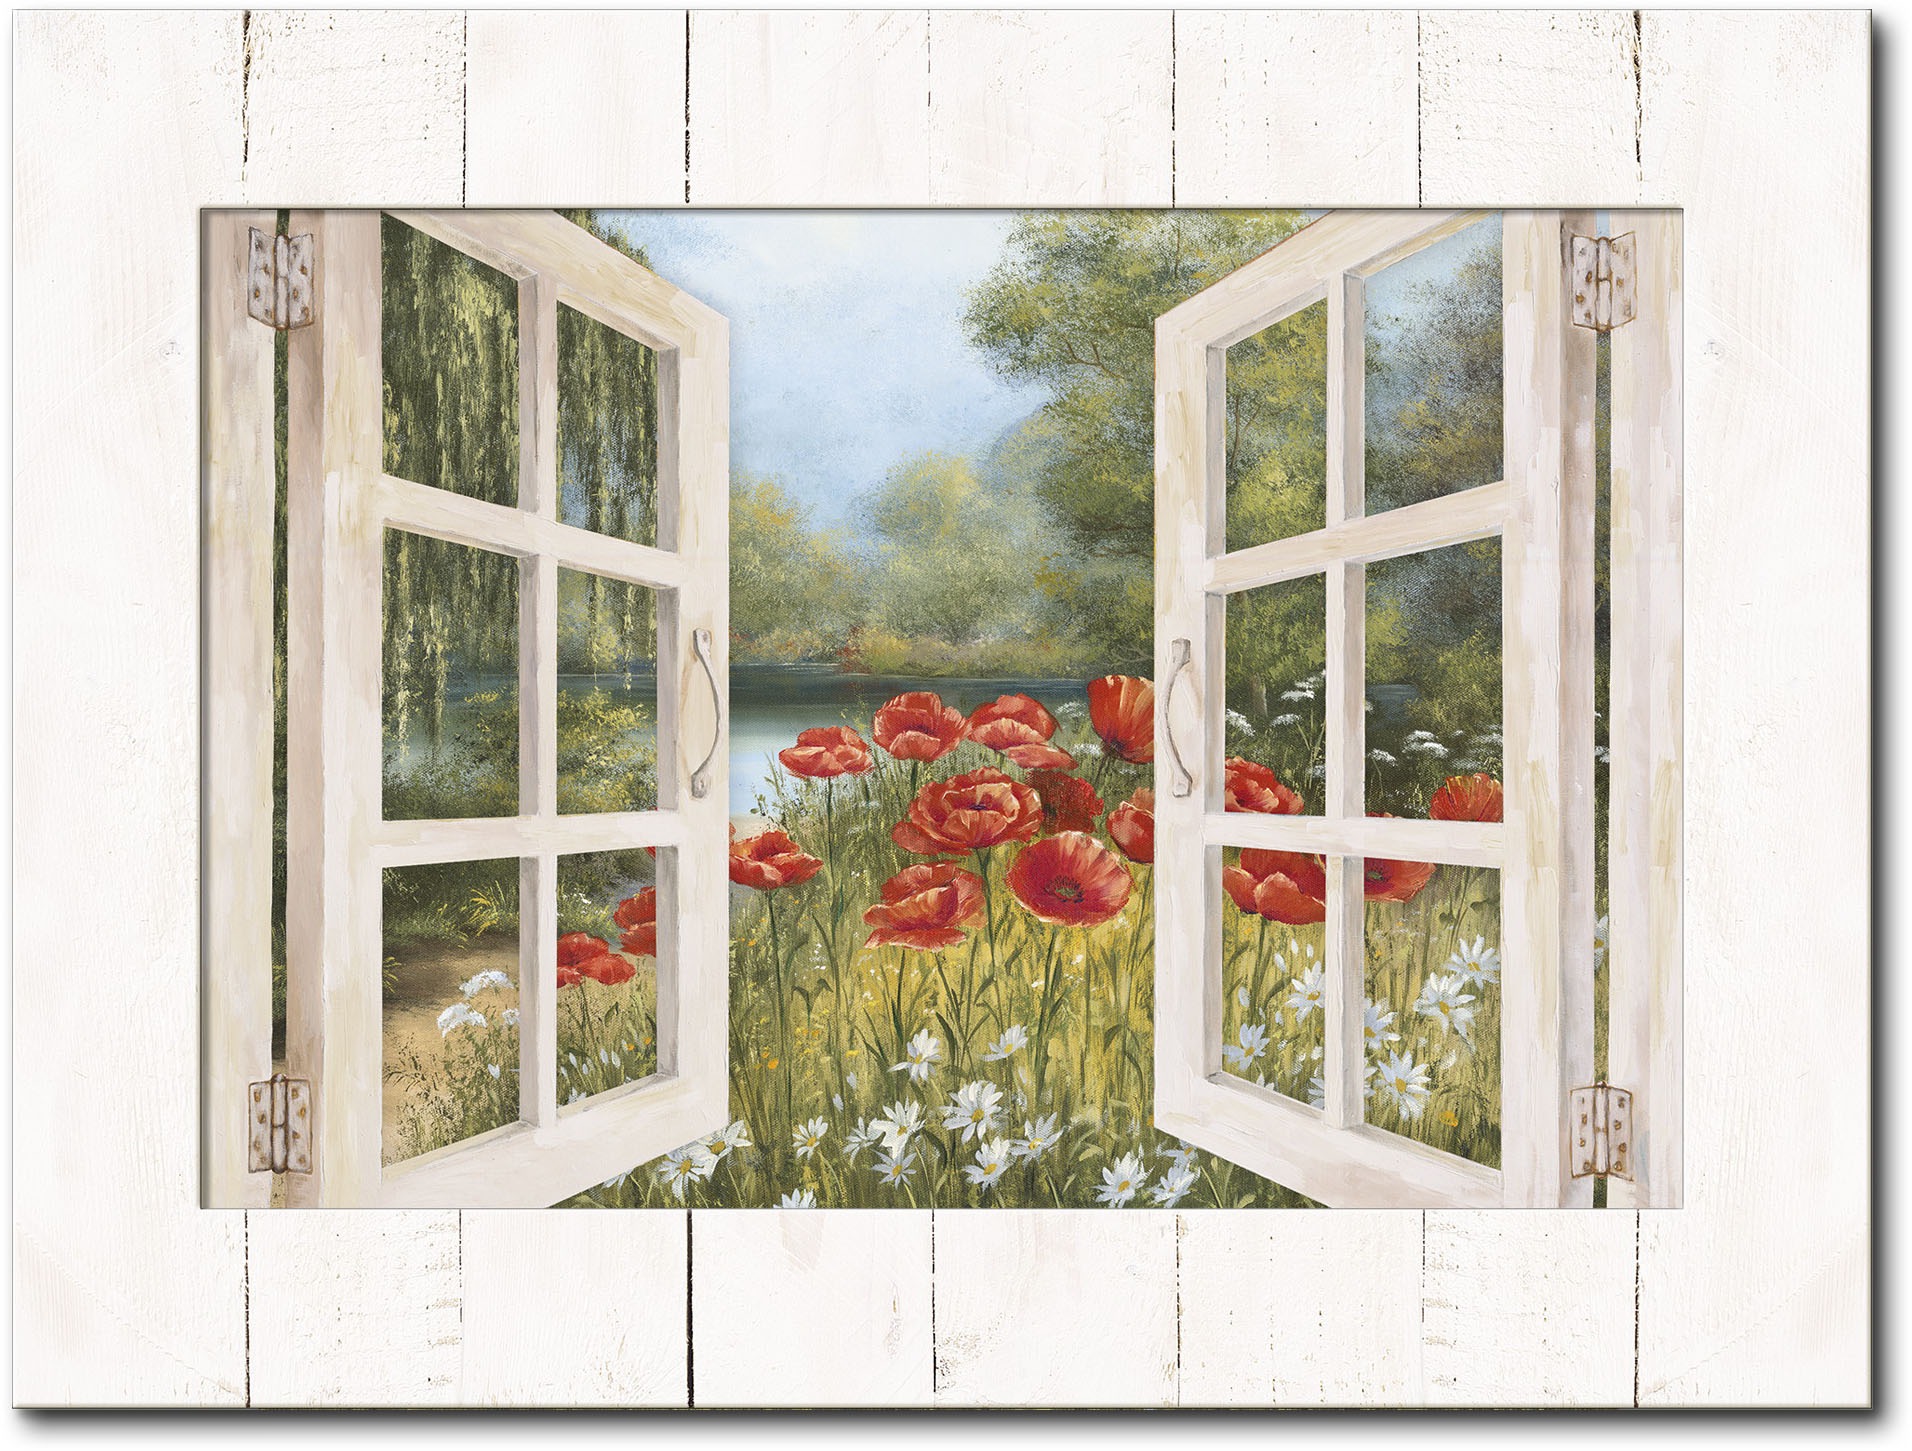 am (1 Blumenwiese, See«, Wandbild »Fensterblick Artland Mohnwiese bei St.) - online